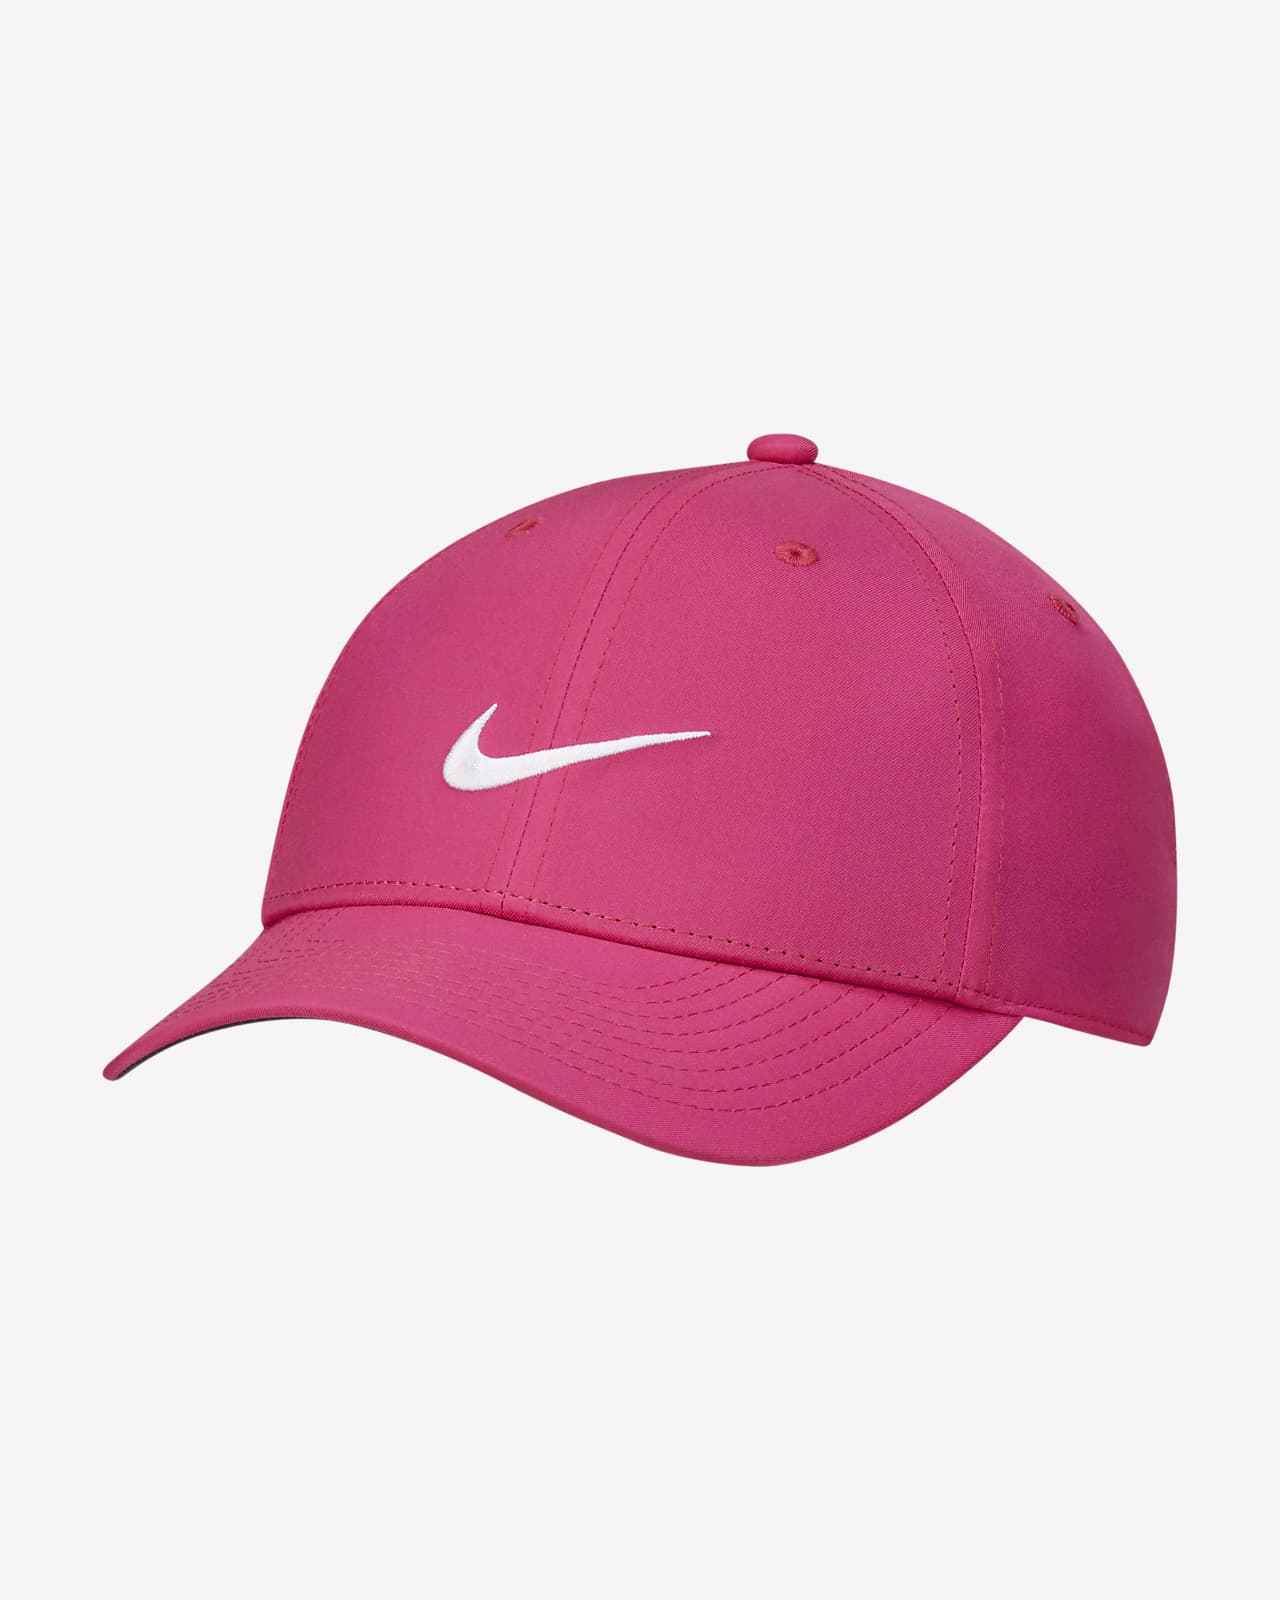 Men's Nike Royal Kentucky Wildcats 2021 Sideline Legacy91 Performance  Adjustable Hat